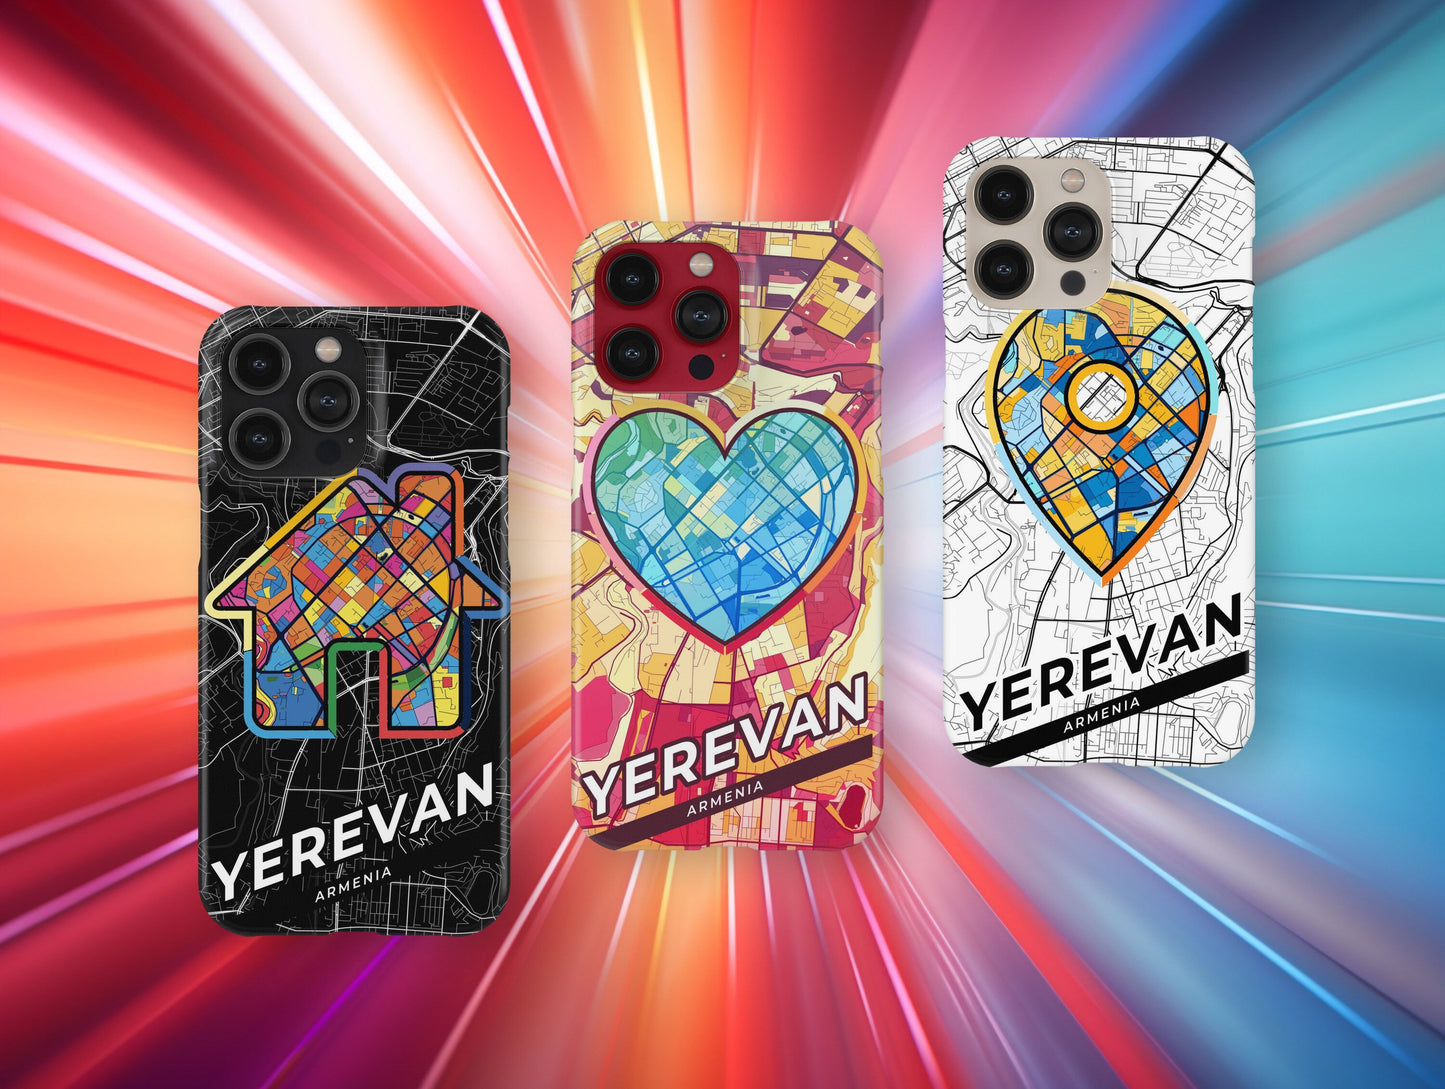 Yerevan Armenia slim phone case with colorful icon